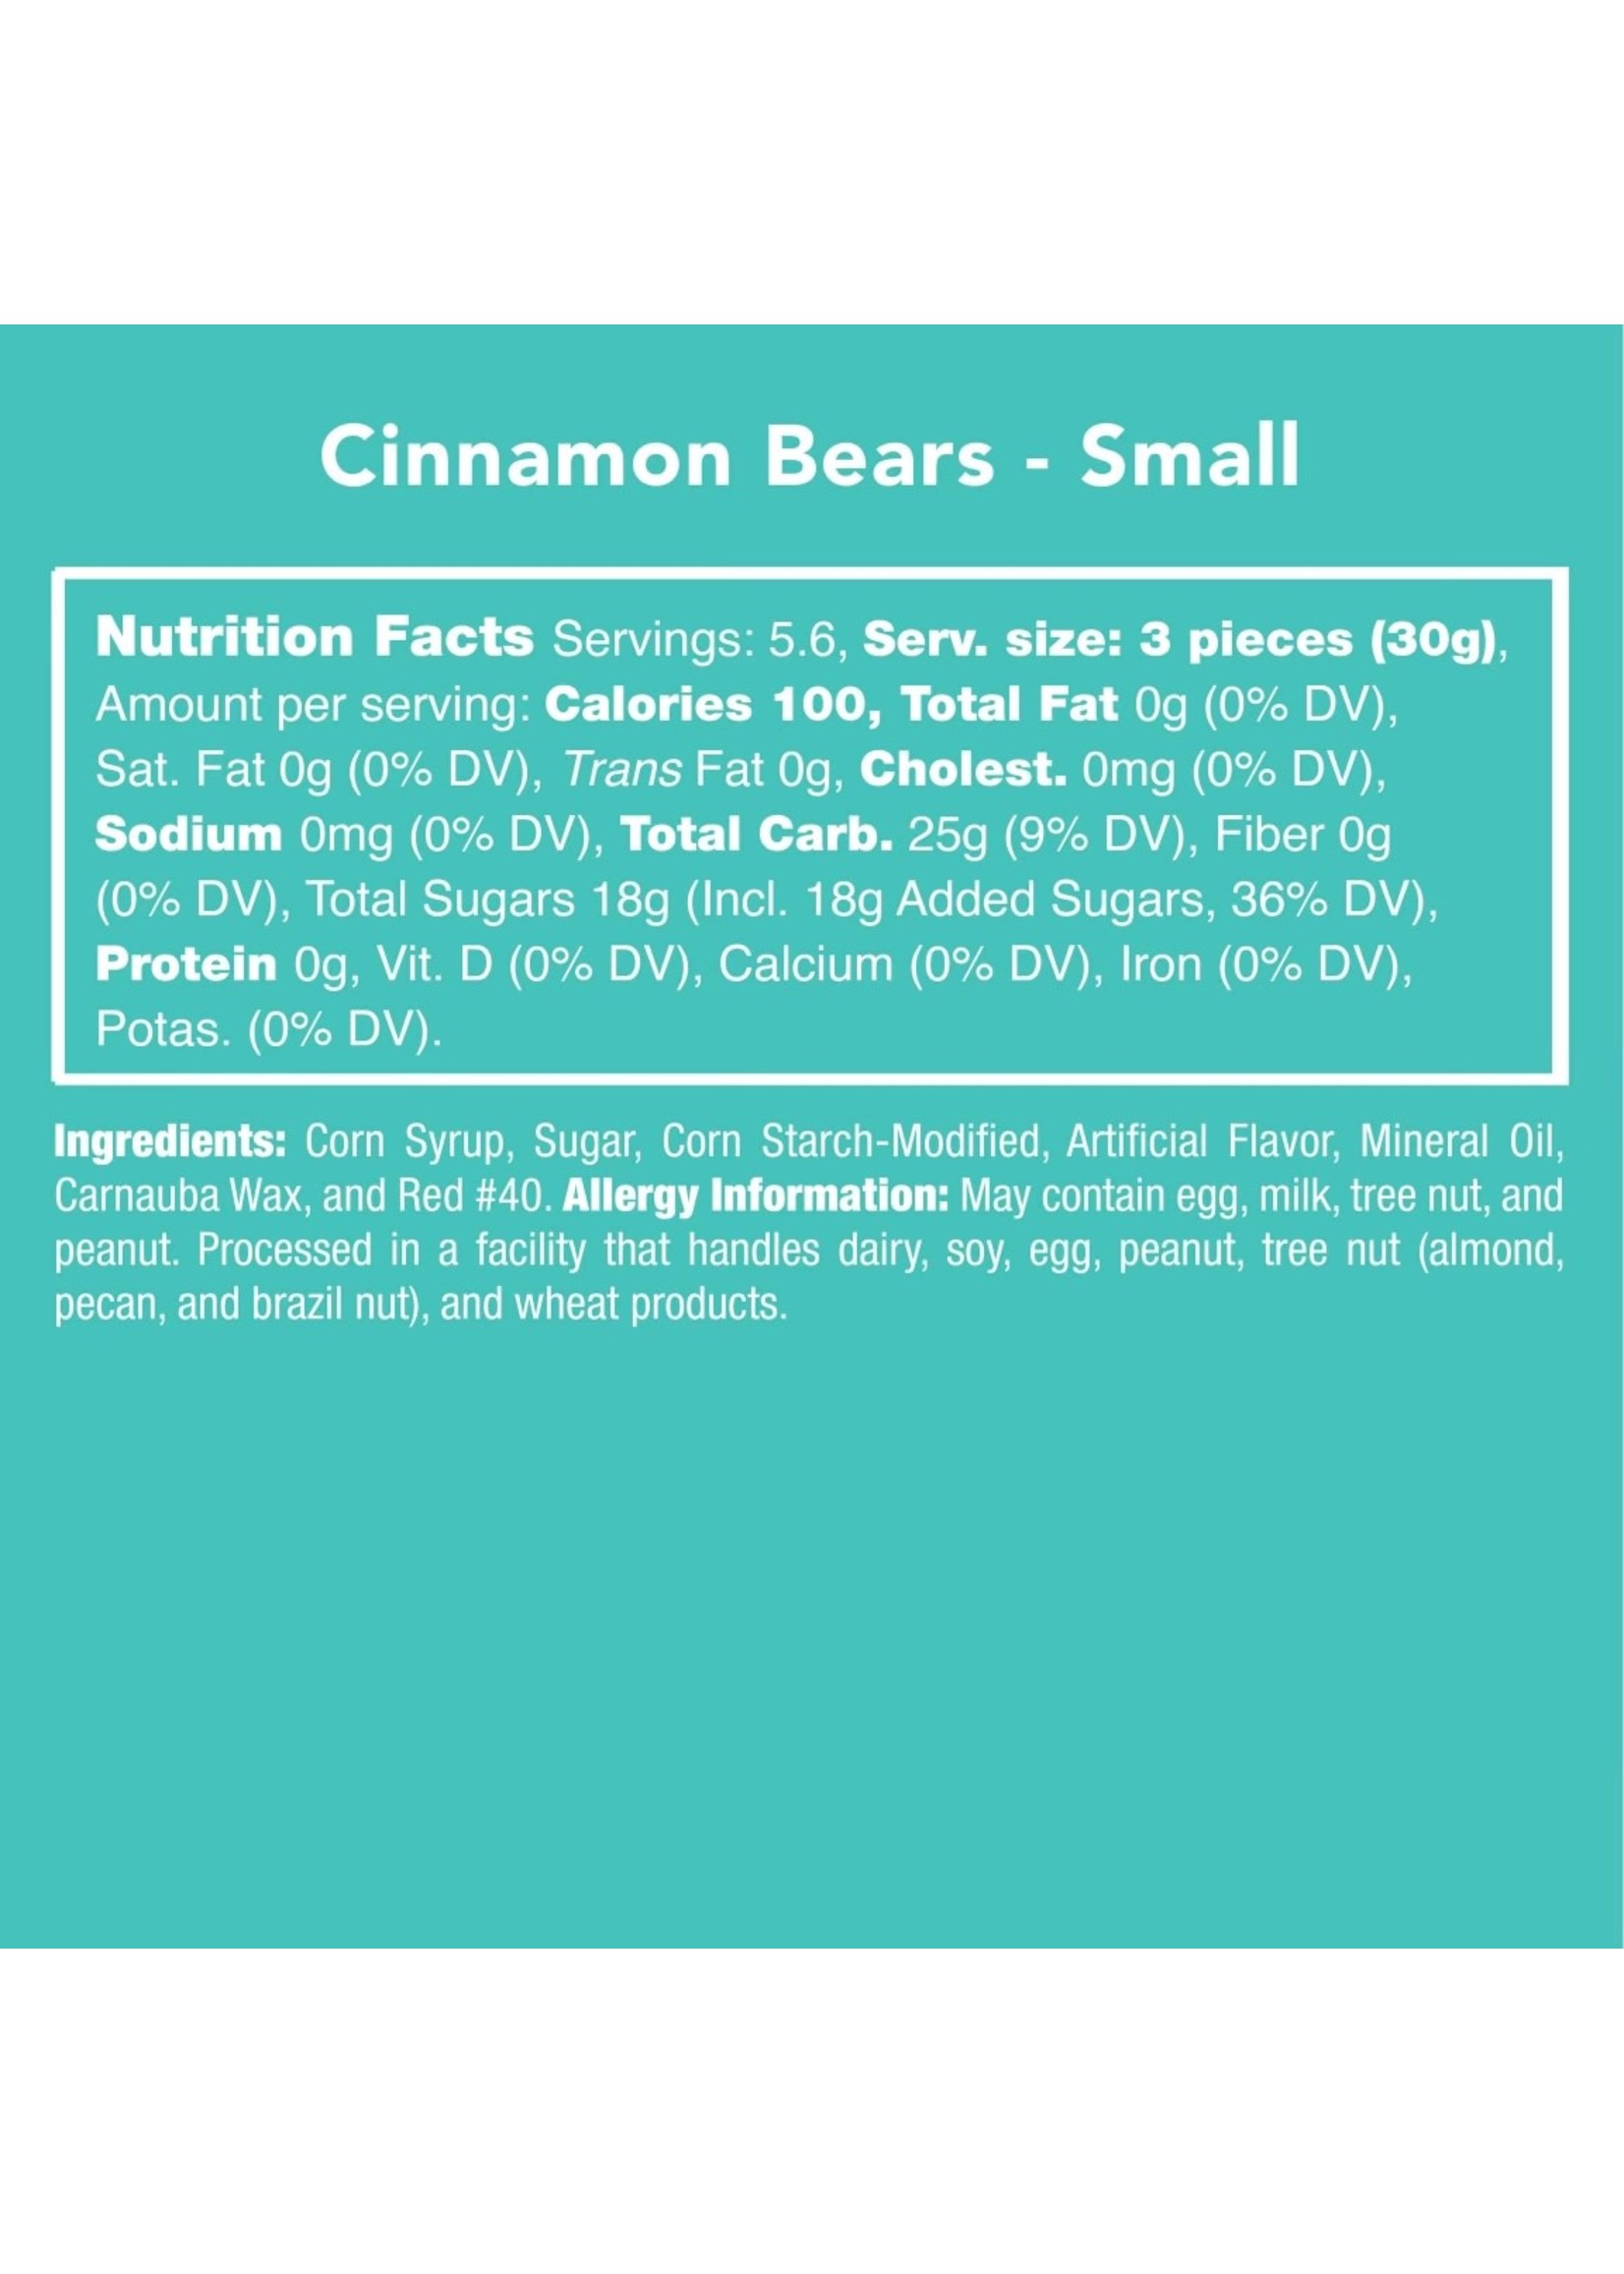 Candy (Cinnamon Bears)